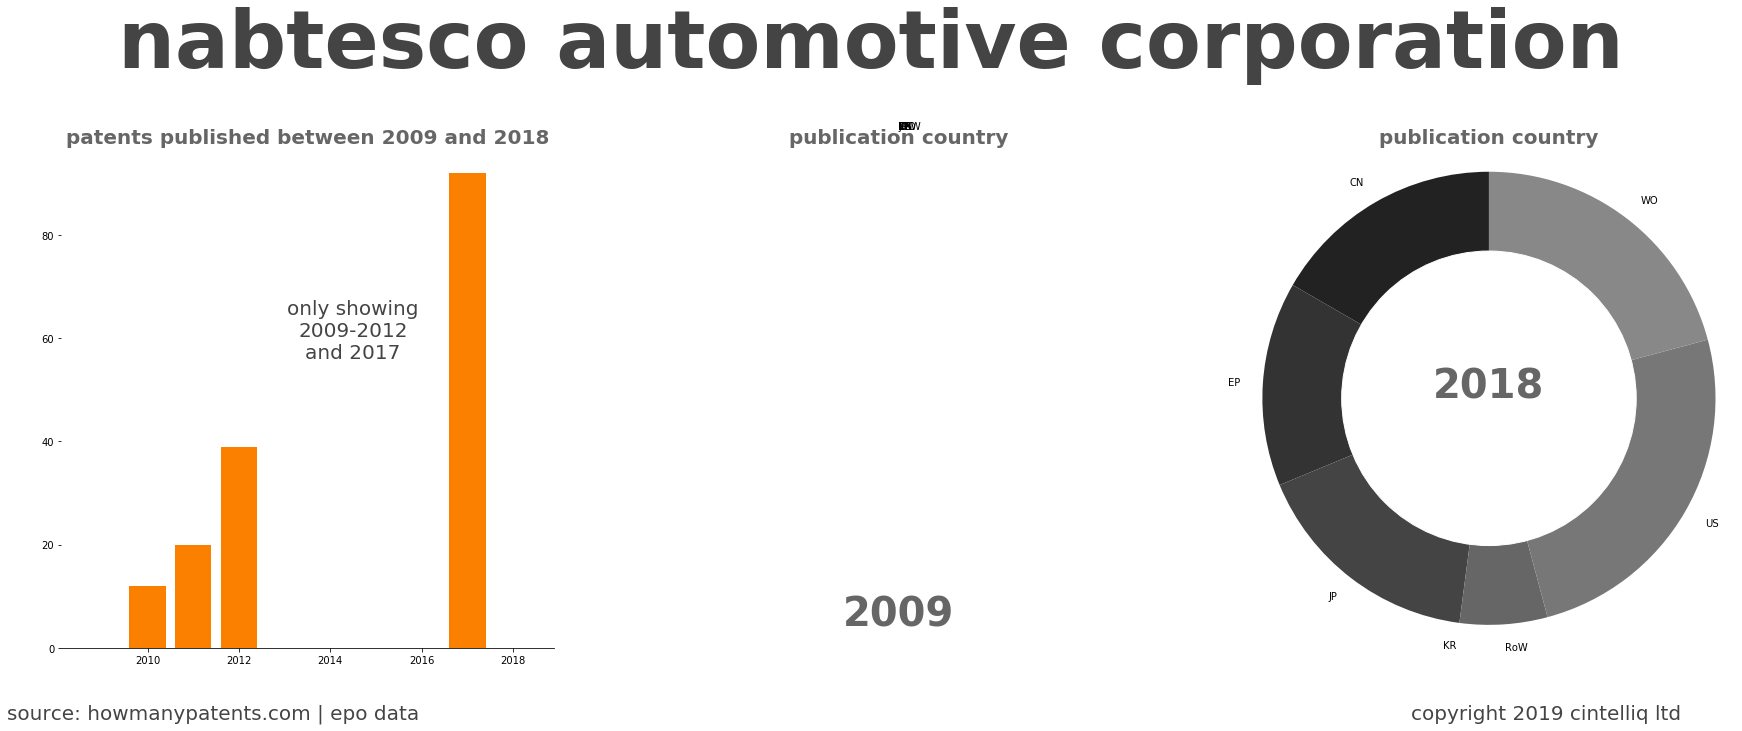 summary of patents for Nabtesco Automotive Corporation